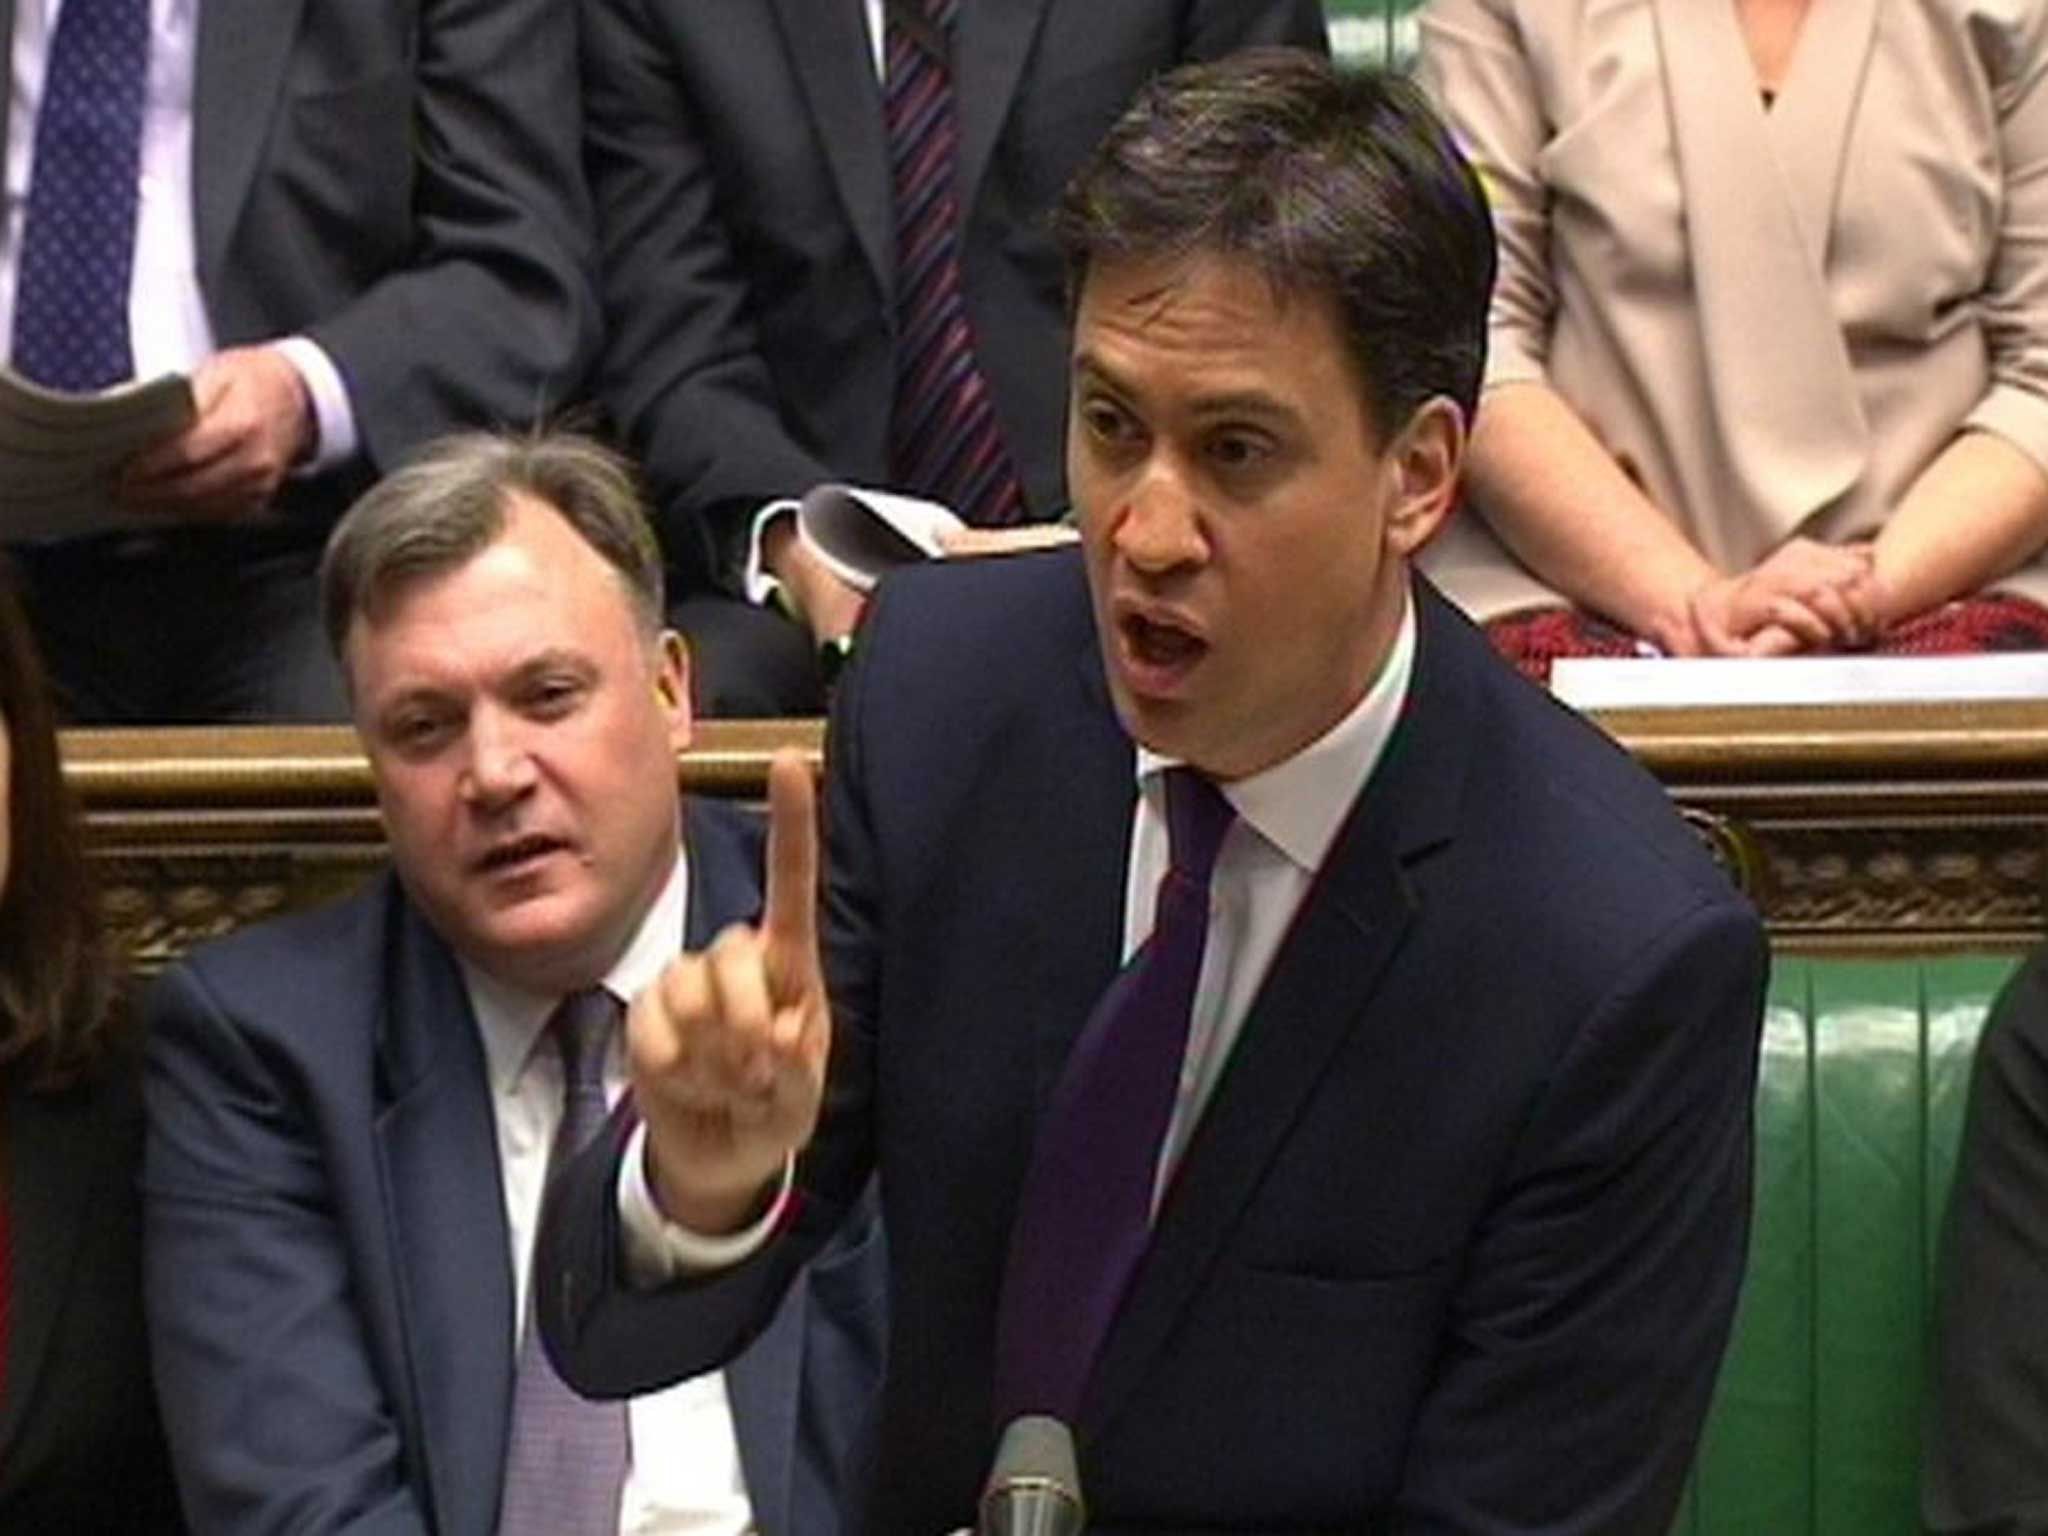 Ed Miliband accusing David Cameron of 'failing' women at PMQs last week